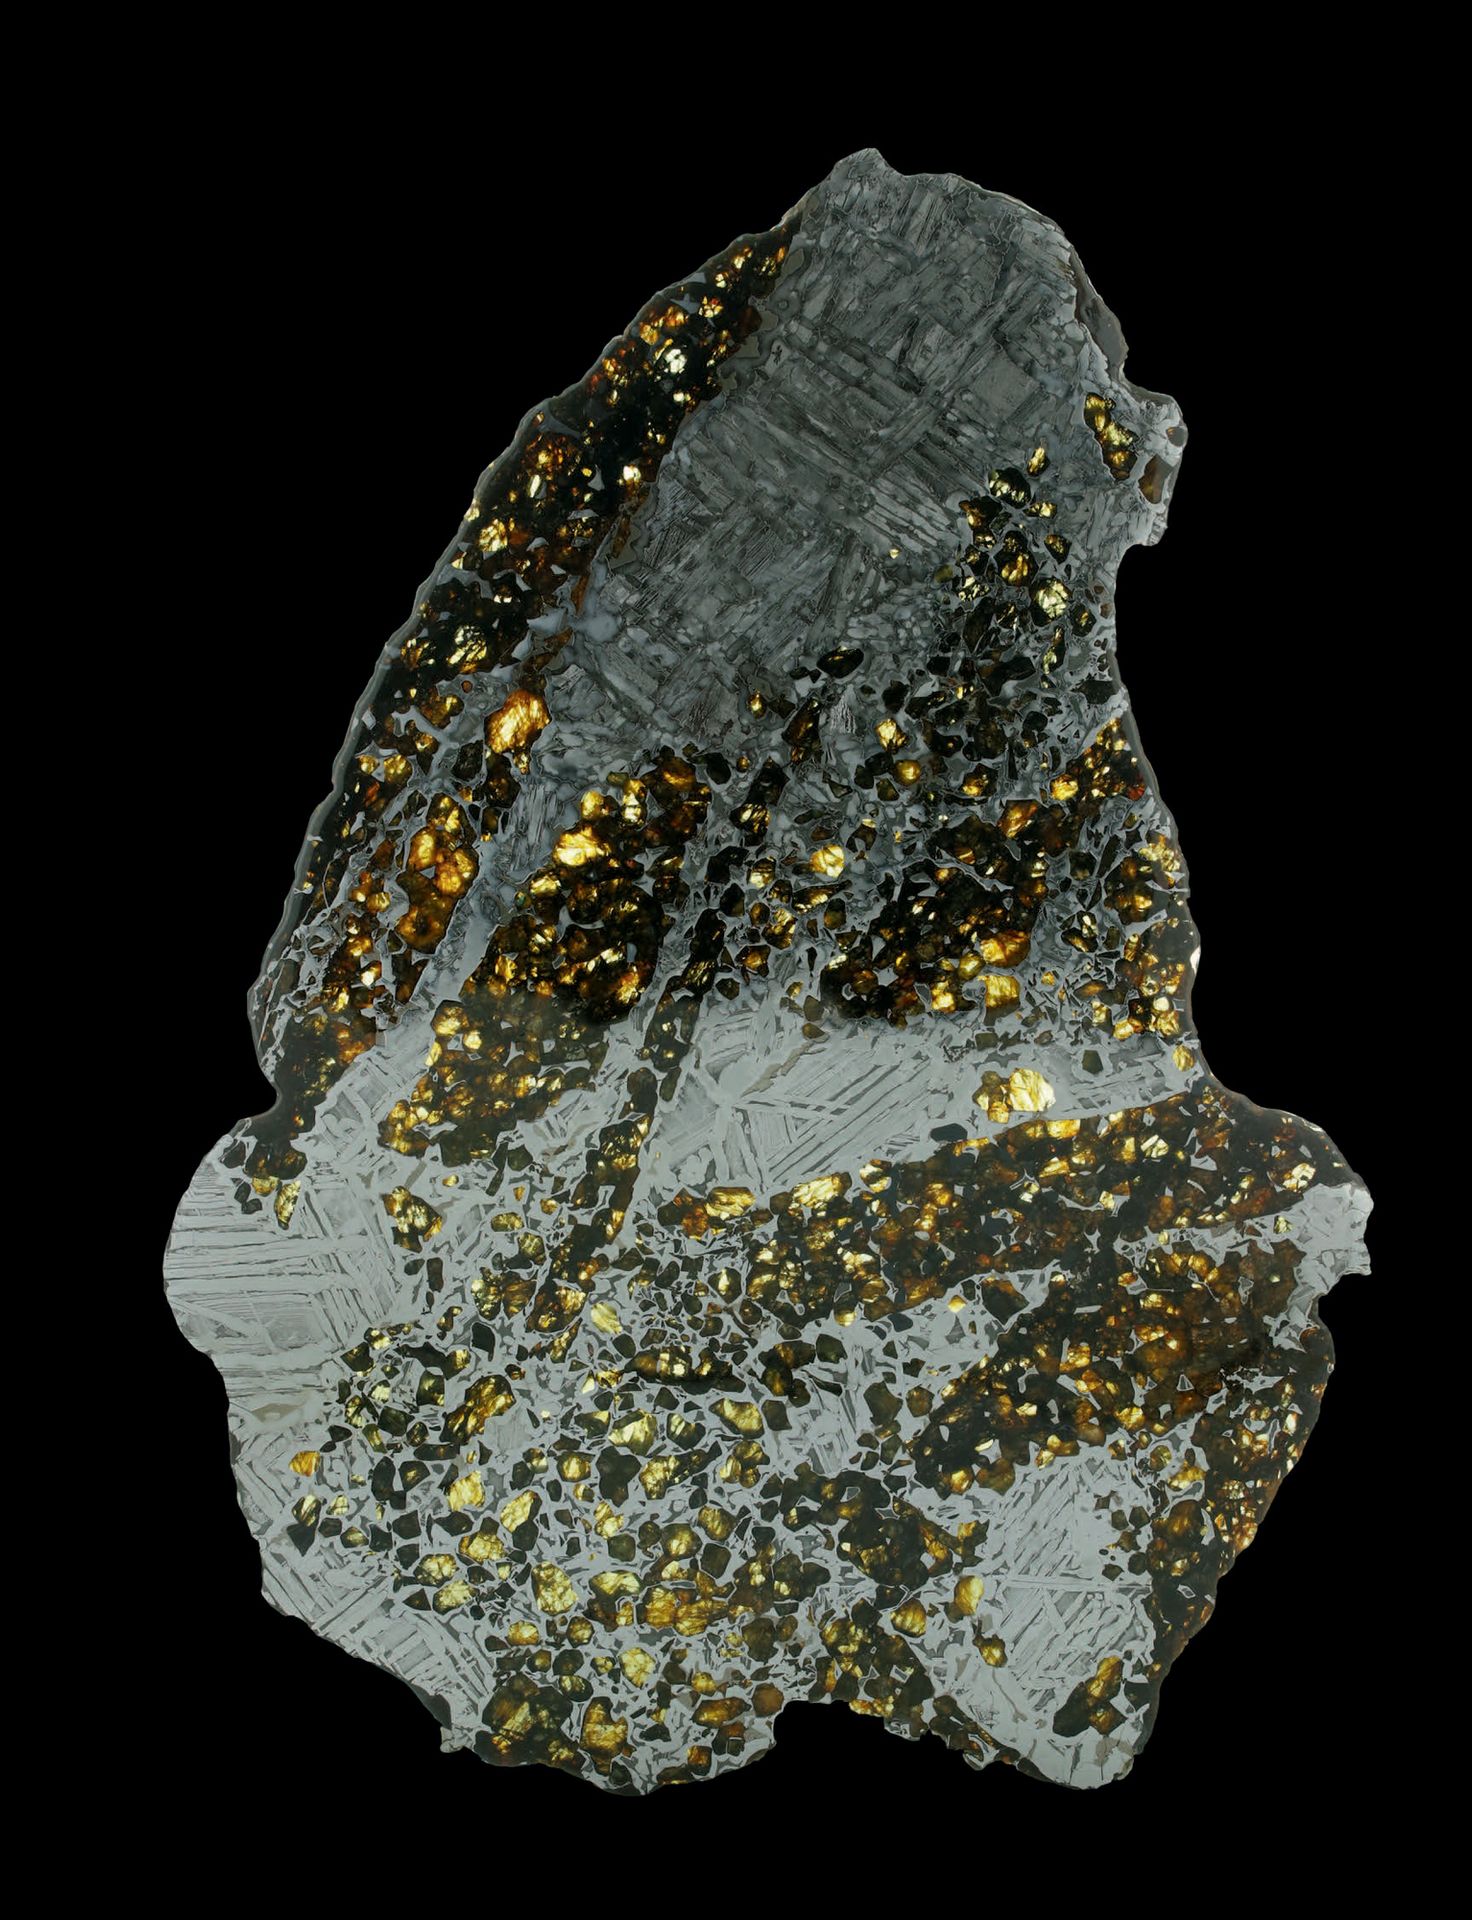 Null 非常大的帕拉石片
H. 360 mm - W. 250 mm - D. 3 mm - Weight: 930 g.
令人印象深刻的帕拉石，质量非常高，&hellip;